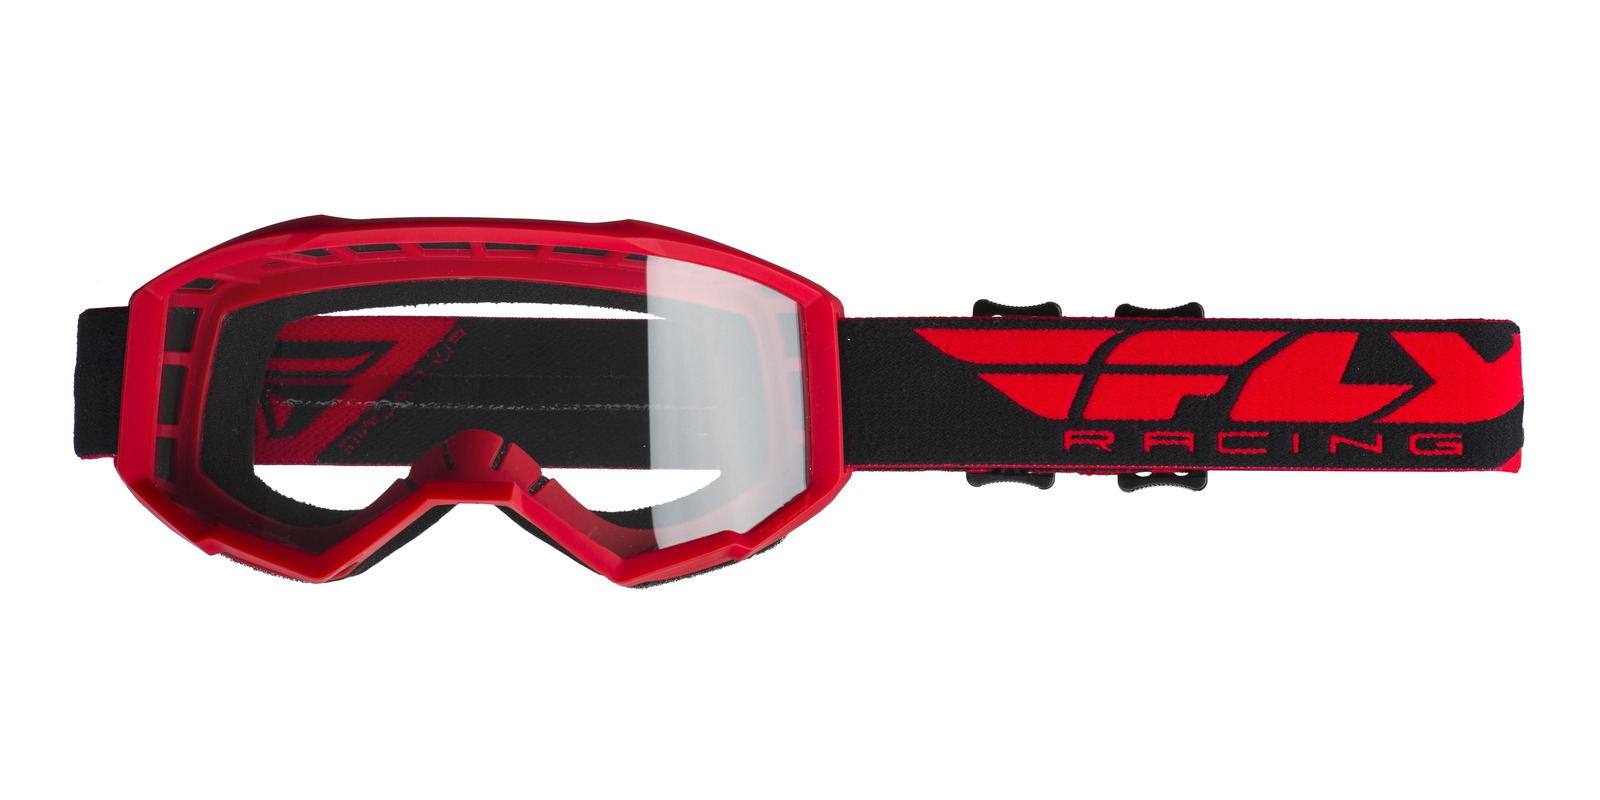 Obrázek produktu brýle FOCUS, FLY RACING - USA (červená, čiré plexi bez pinů) 37-5100